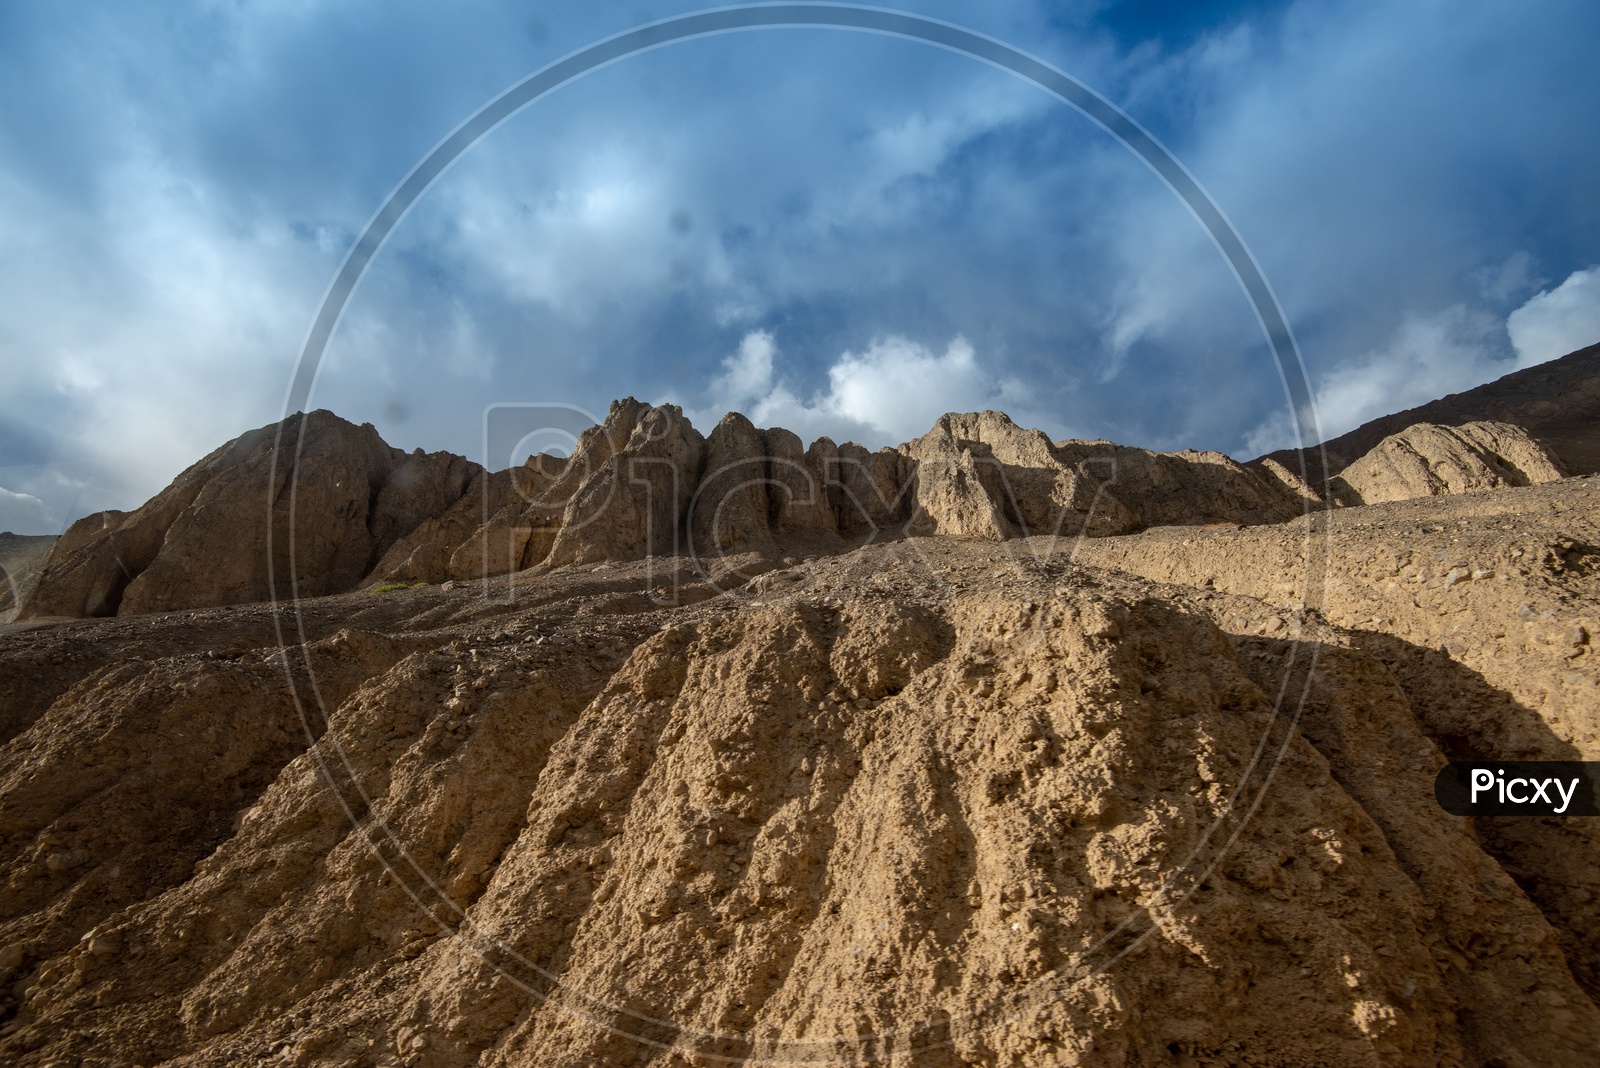 Terrain Badlands with Sedimentary Soil in Leh